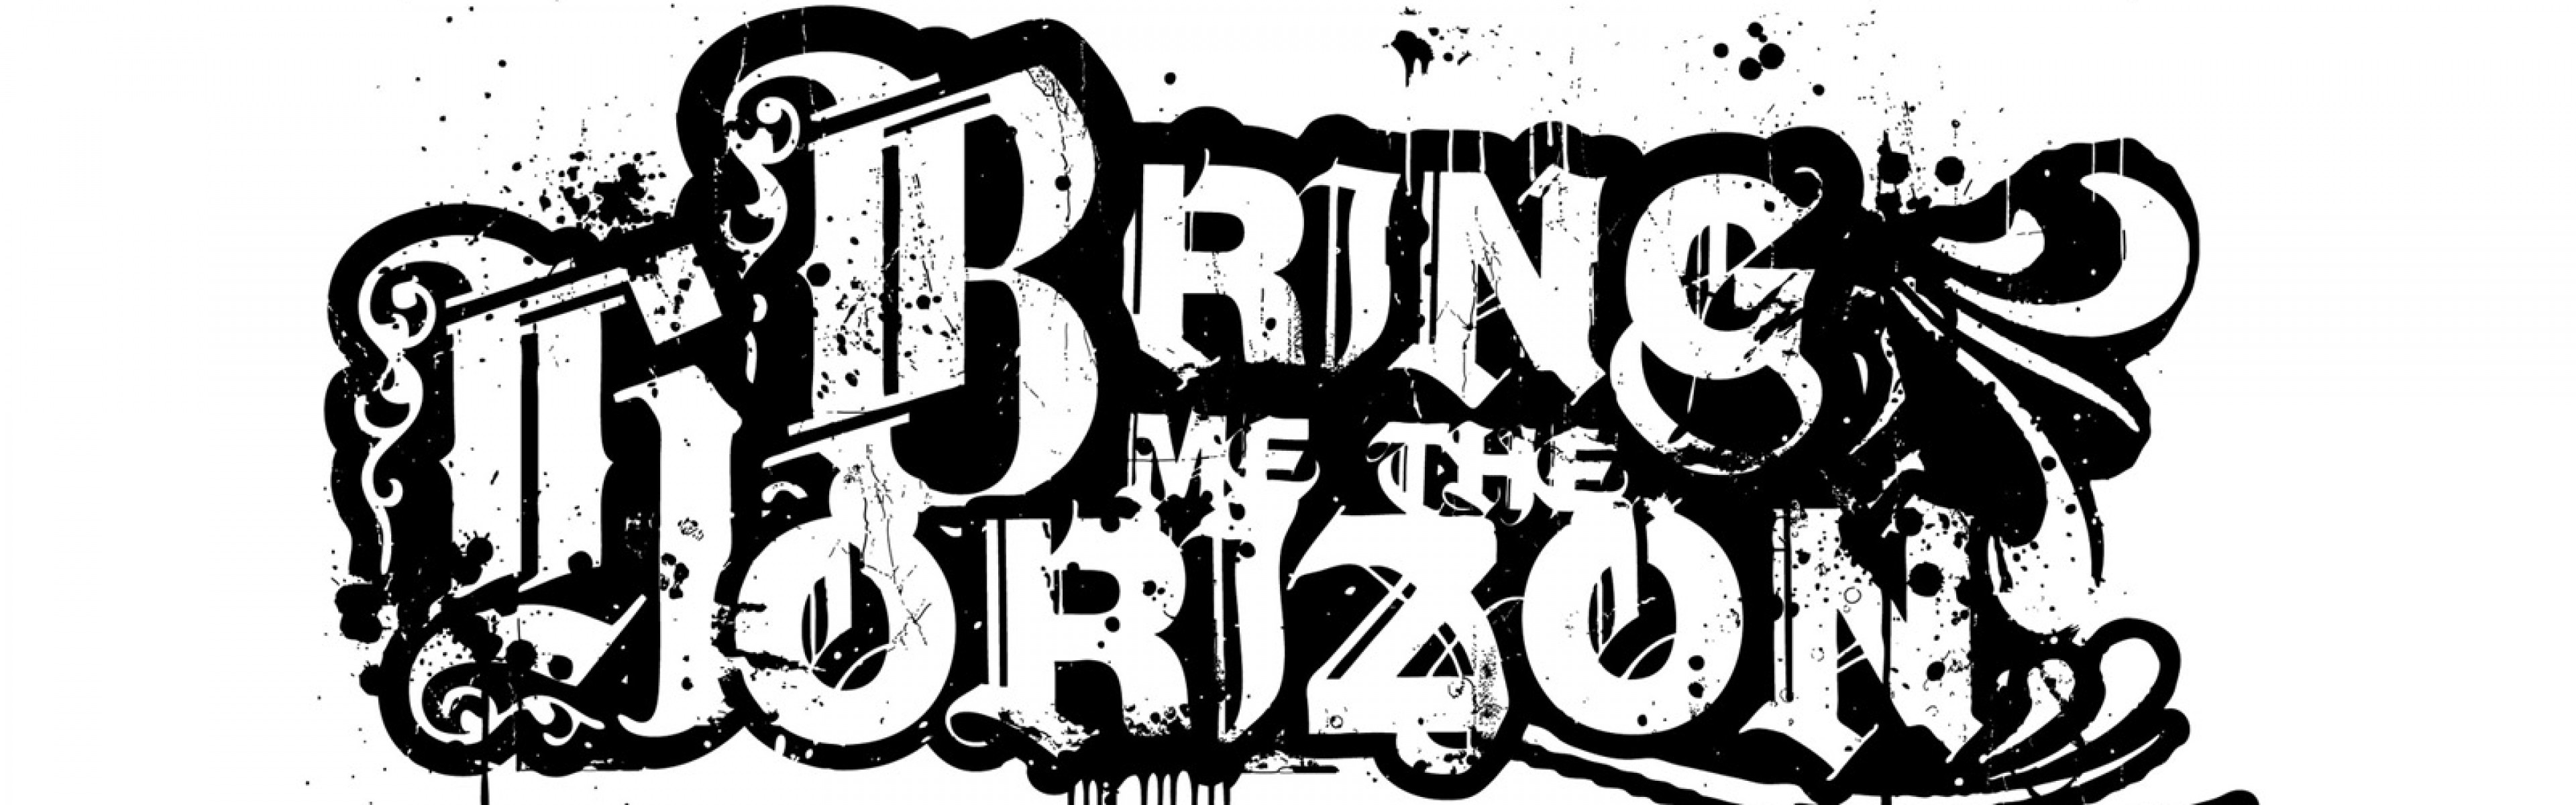 Bring Me The Horizon Text Sign Graphics Spray - Bring Me The Horizon - HD Wallpaper 